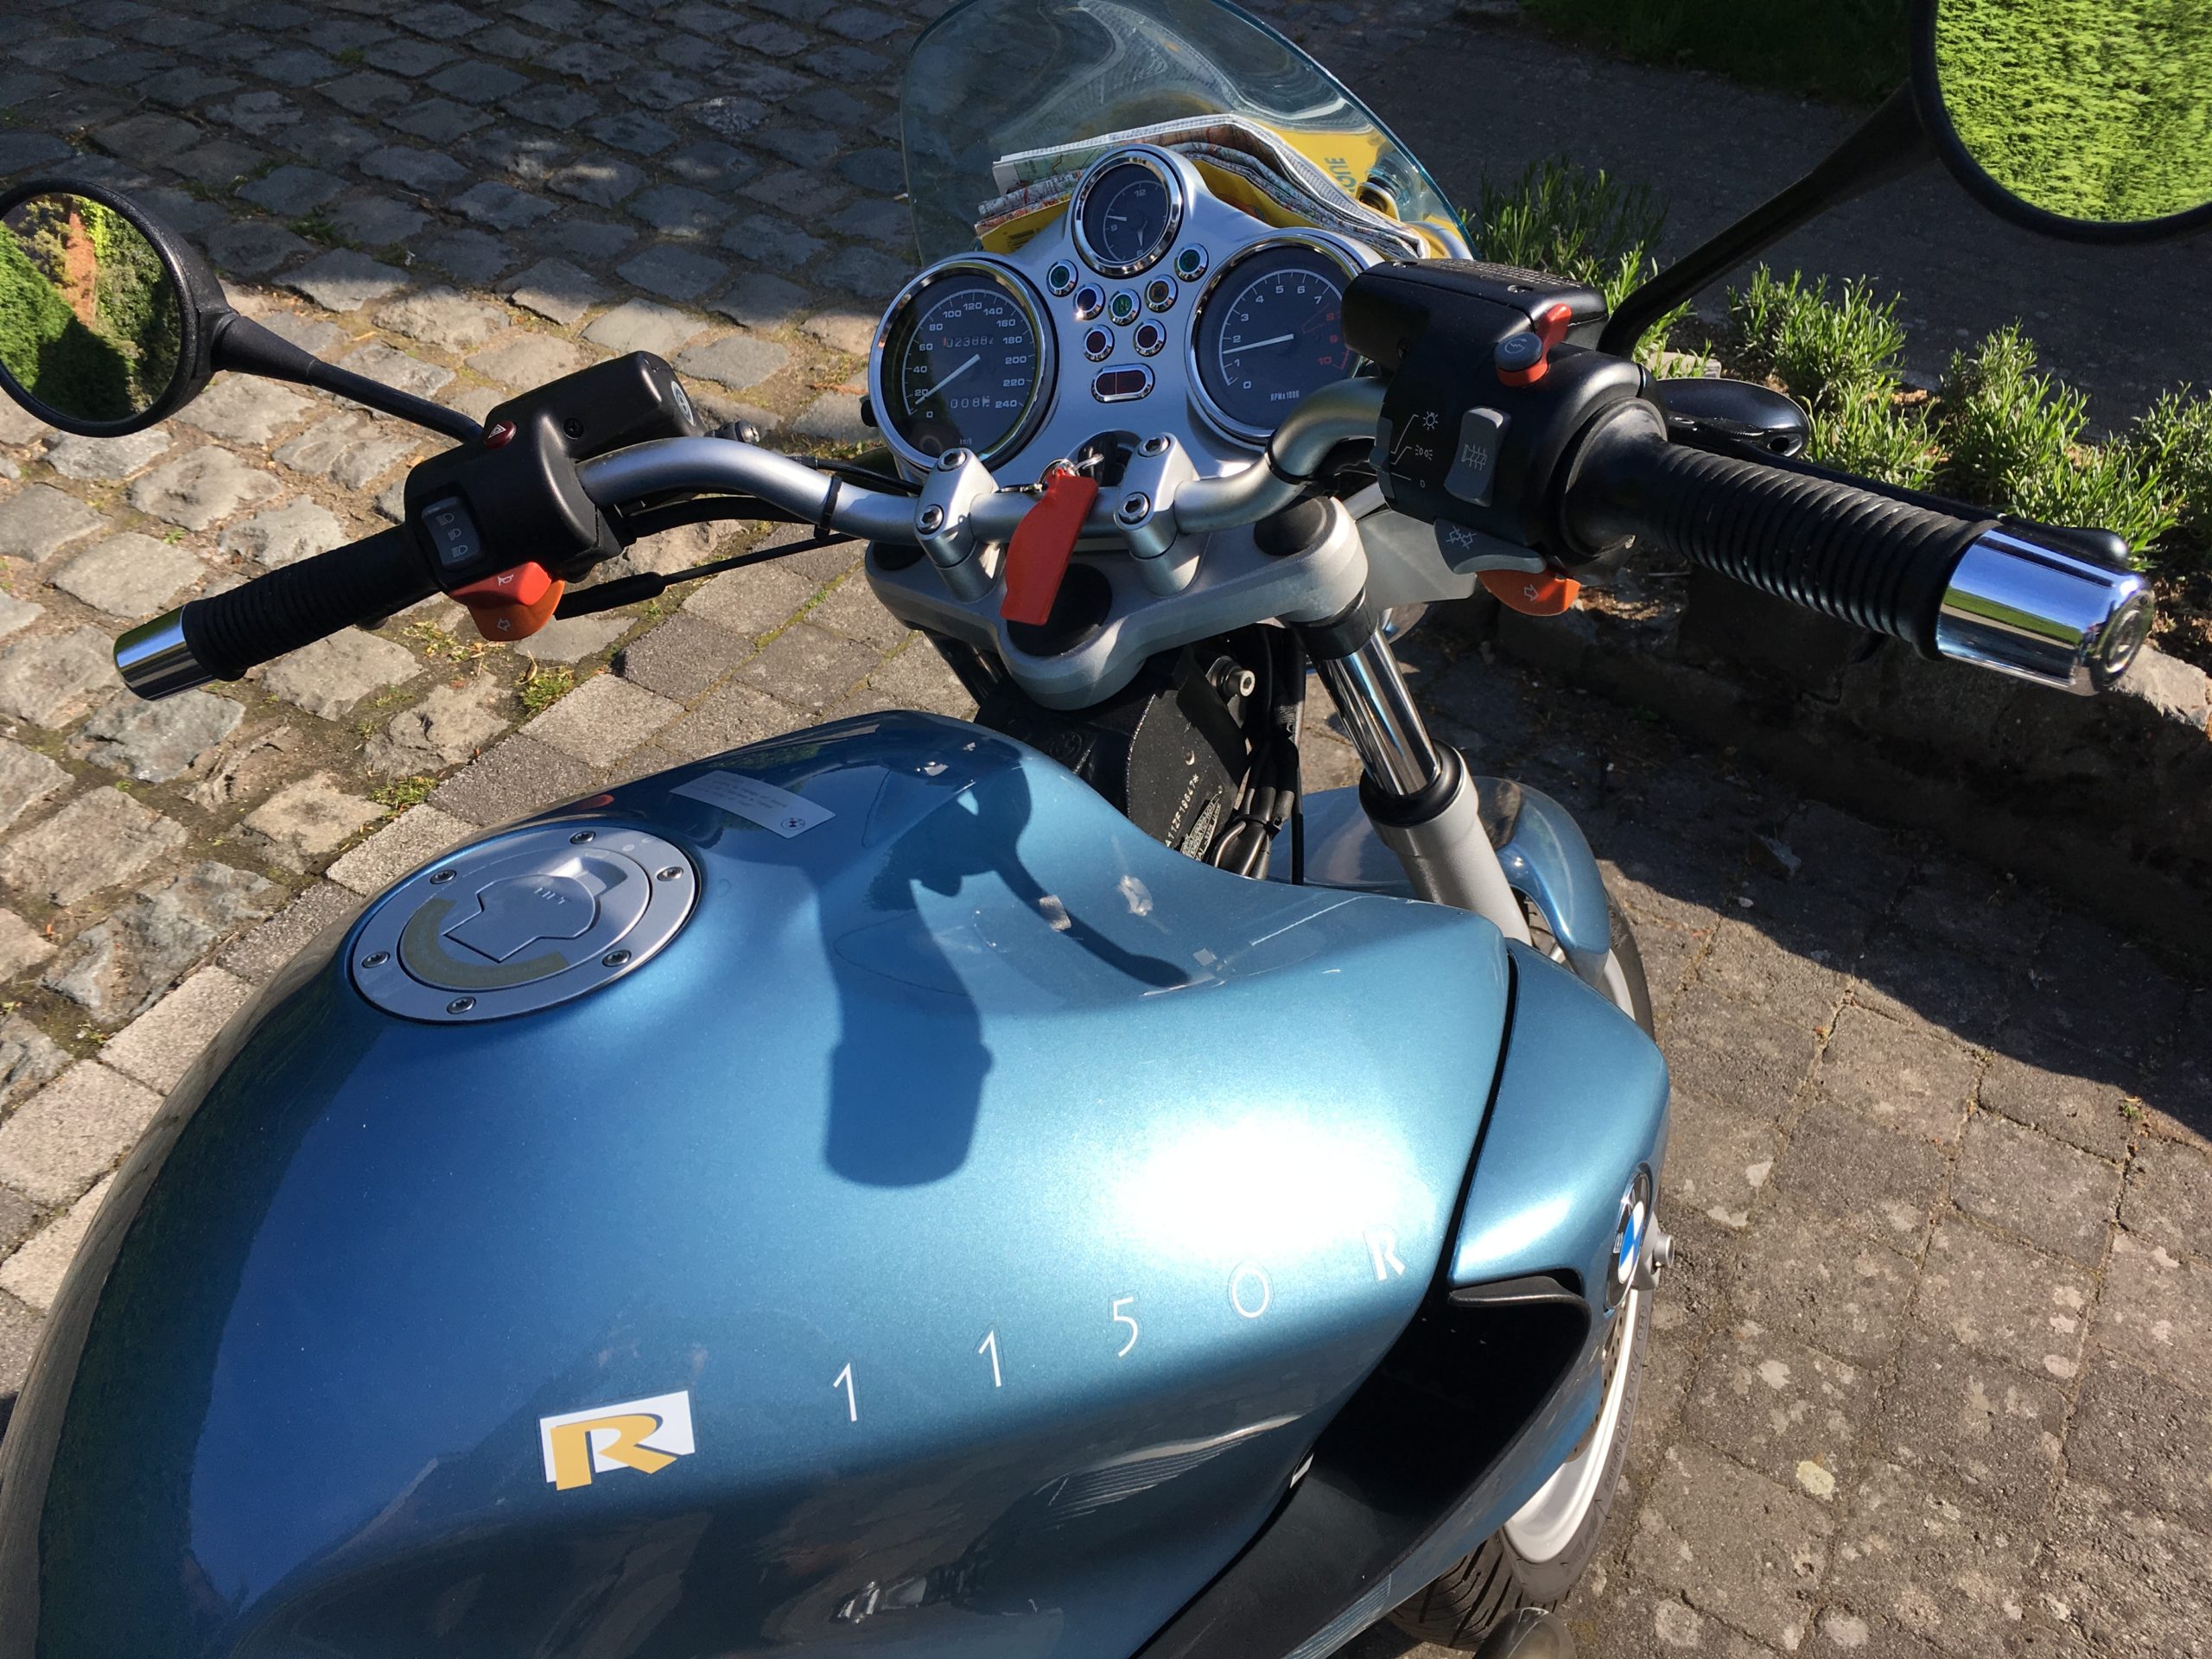 Belgium ready for mandatory motorbike inspection in 2022?